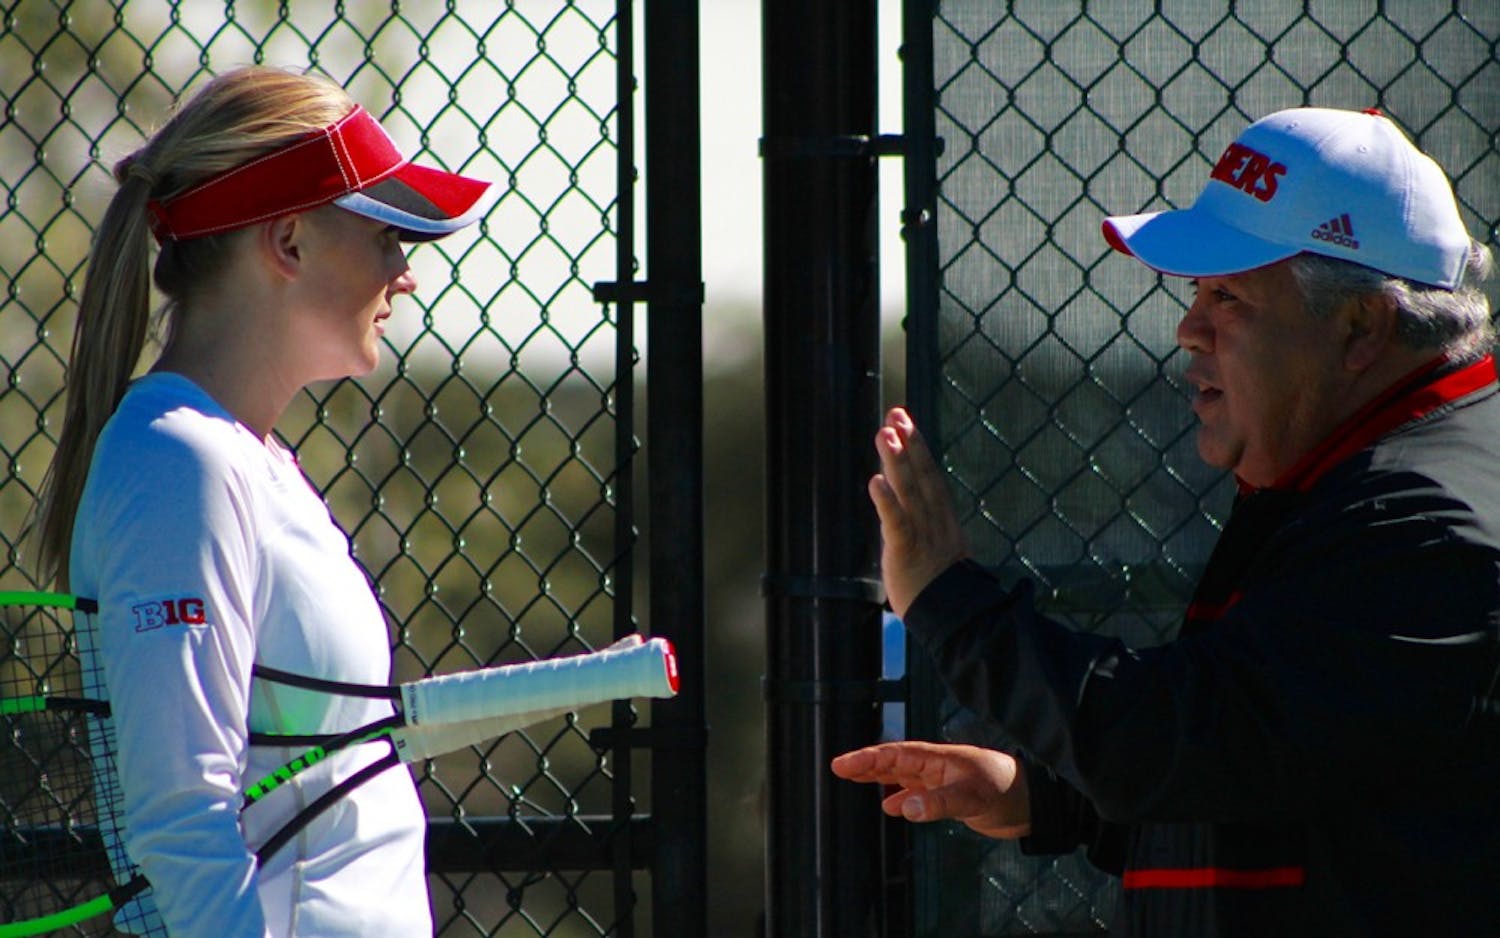 Freshman Pauline Jahren speaks with IU Coach Ramiro Azcui during a match in April. IU women's tennis took on Illinois and lost, 6-1.&nbsp;